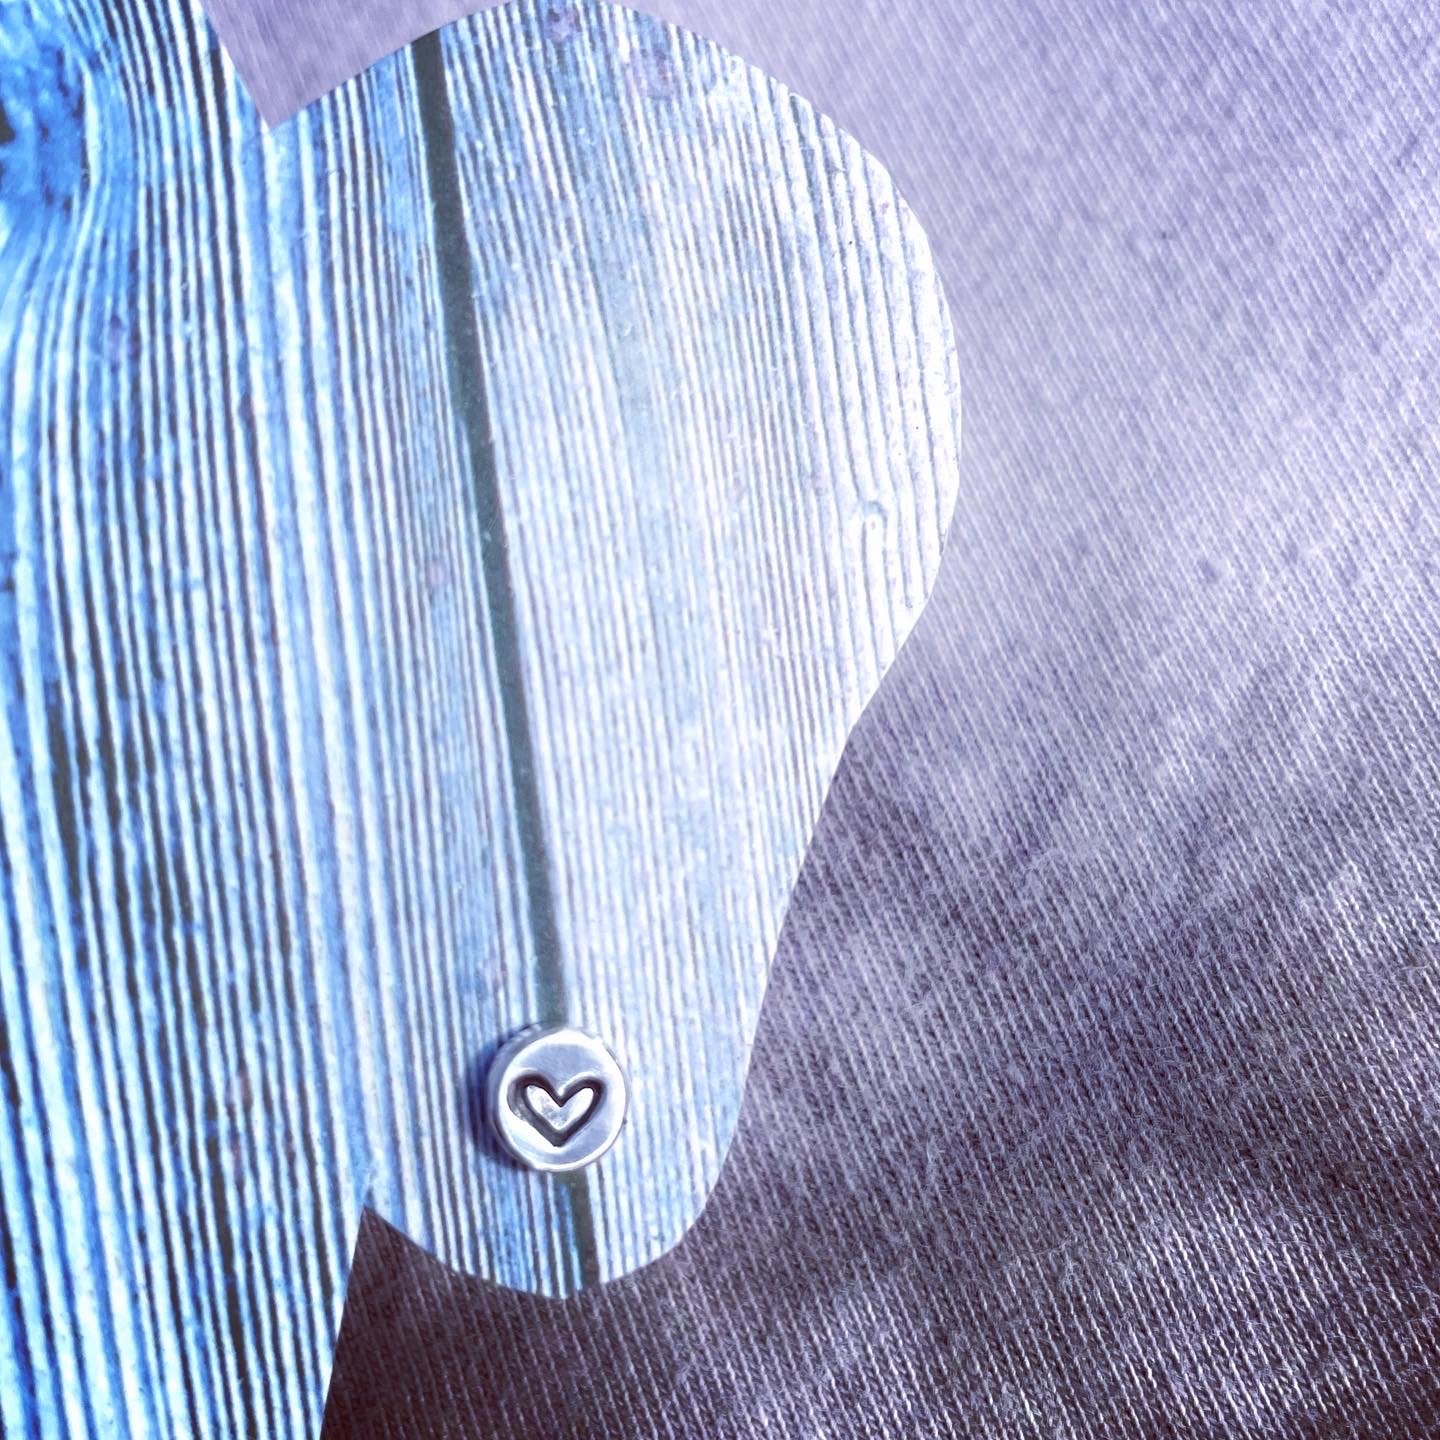 Image of Handmade Sterling Silver Love Heart Stud Earrings 